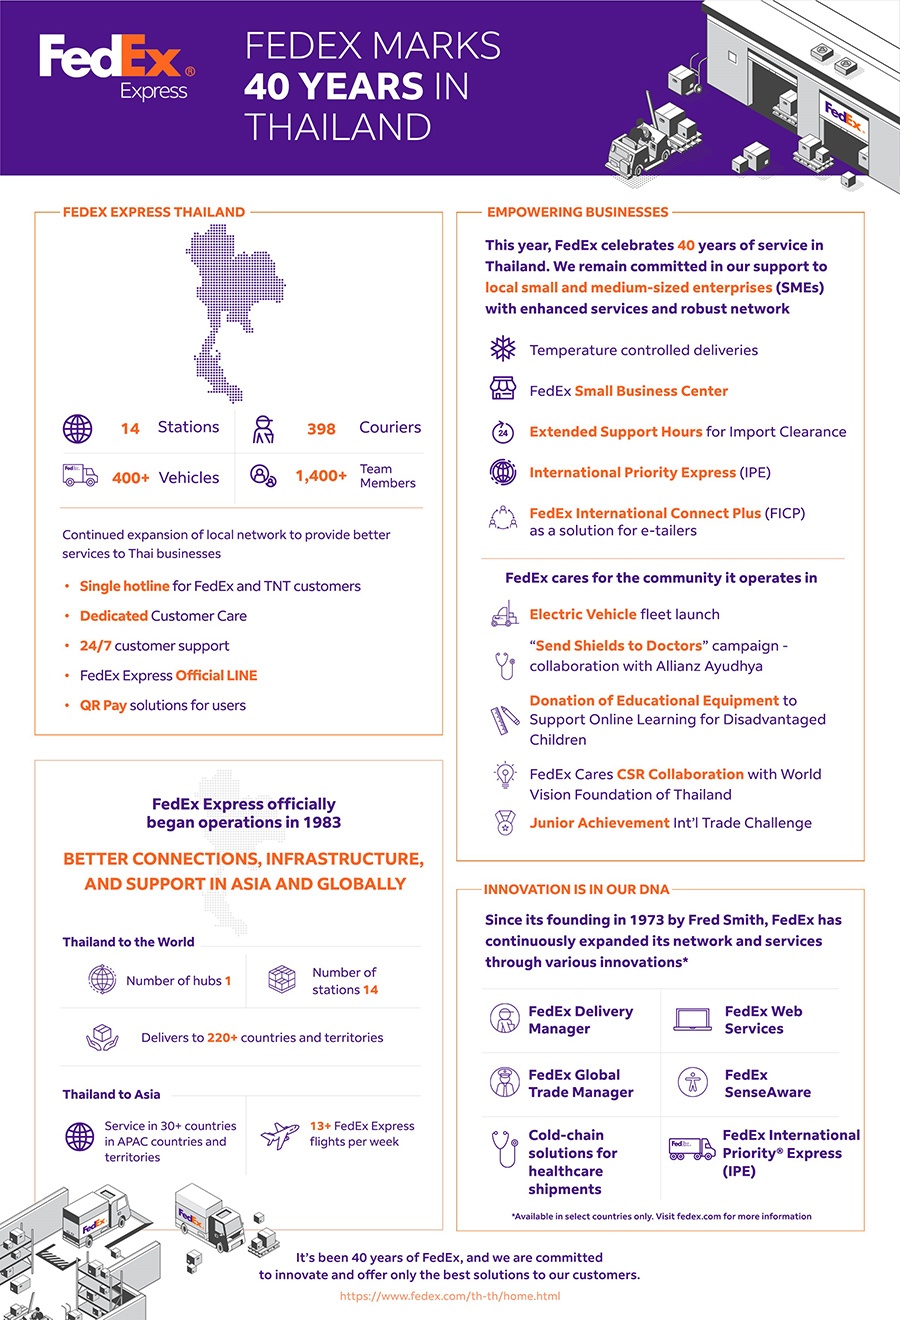 Detailed infographic on FedEx Thailand 40 year milestones